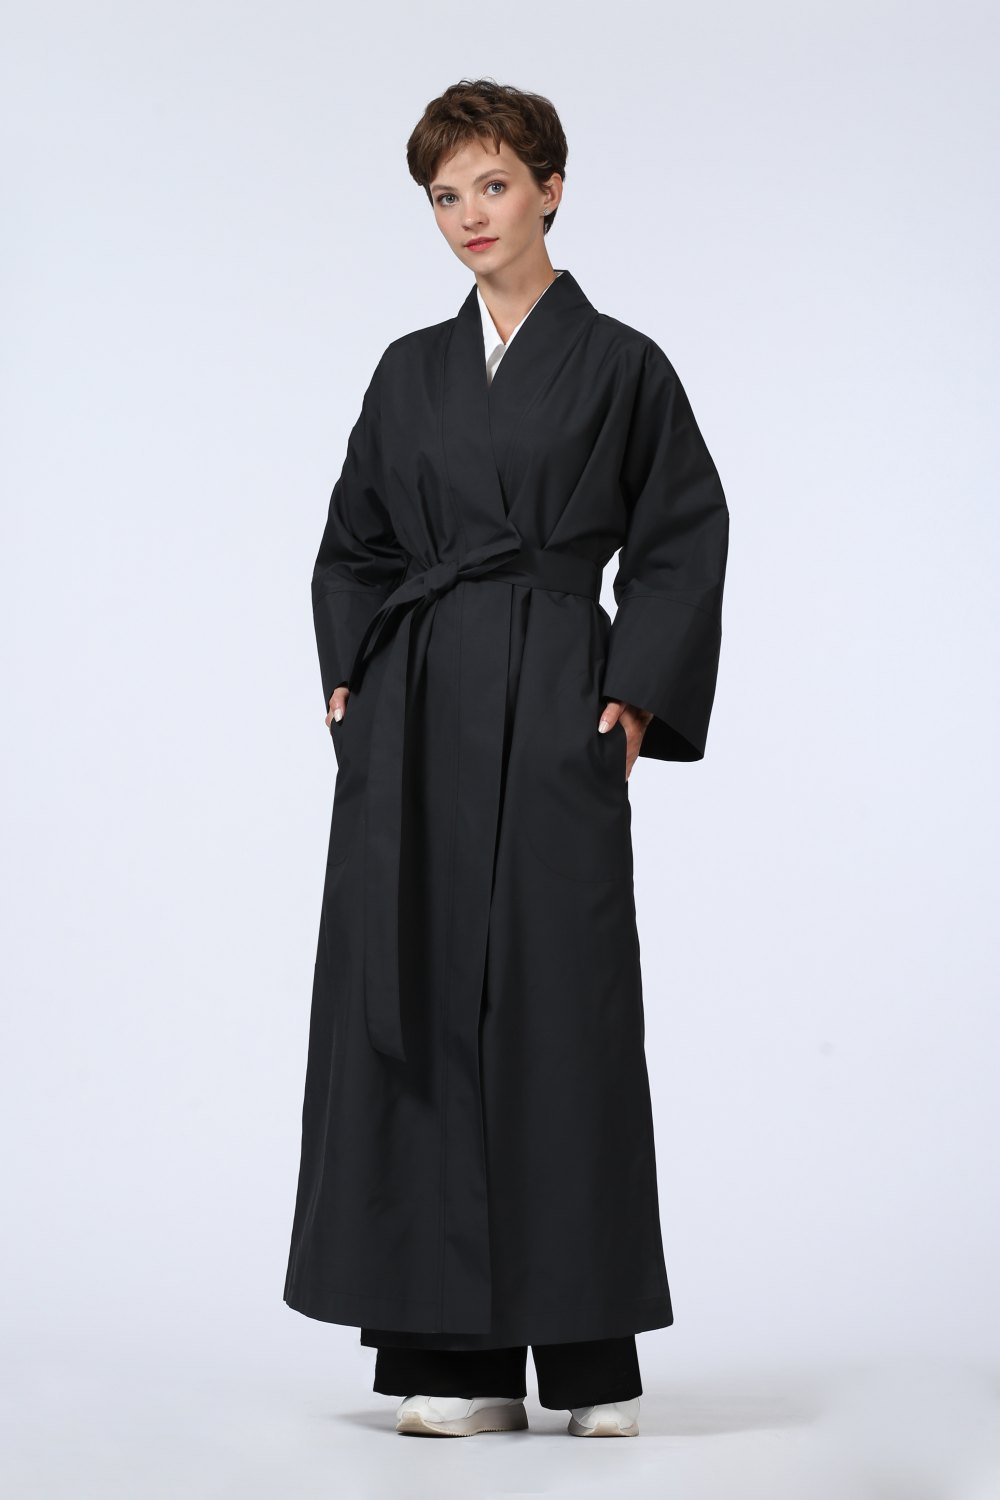 Кардиган женский Кимоно Плащевка модель 661/1 цвет: чёрный